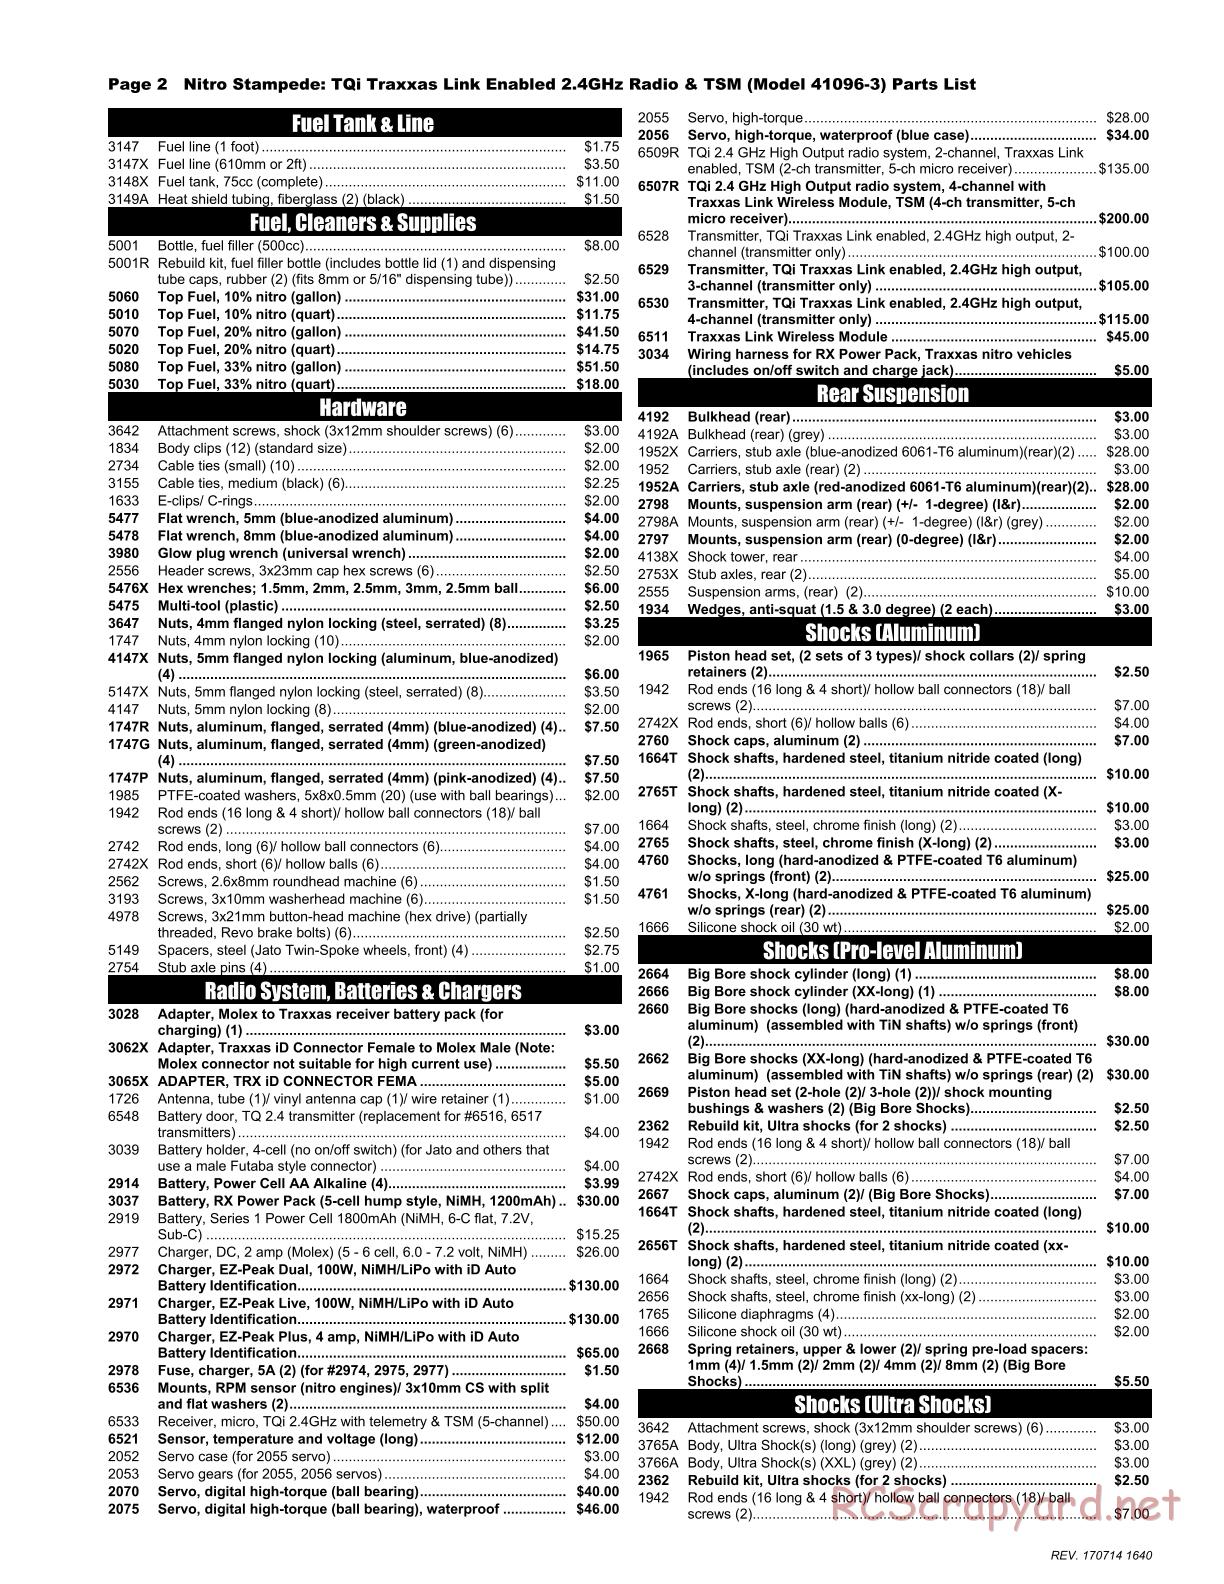 Traxxas - Nitro Stampede TSM - Parts List - Page 2